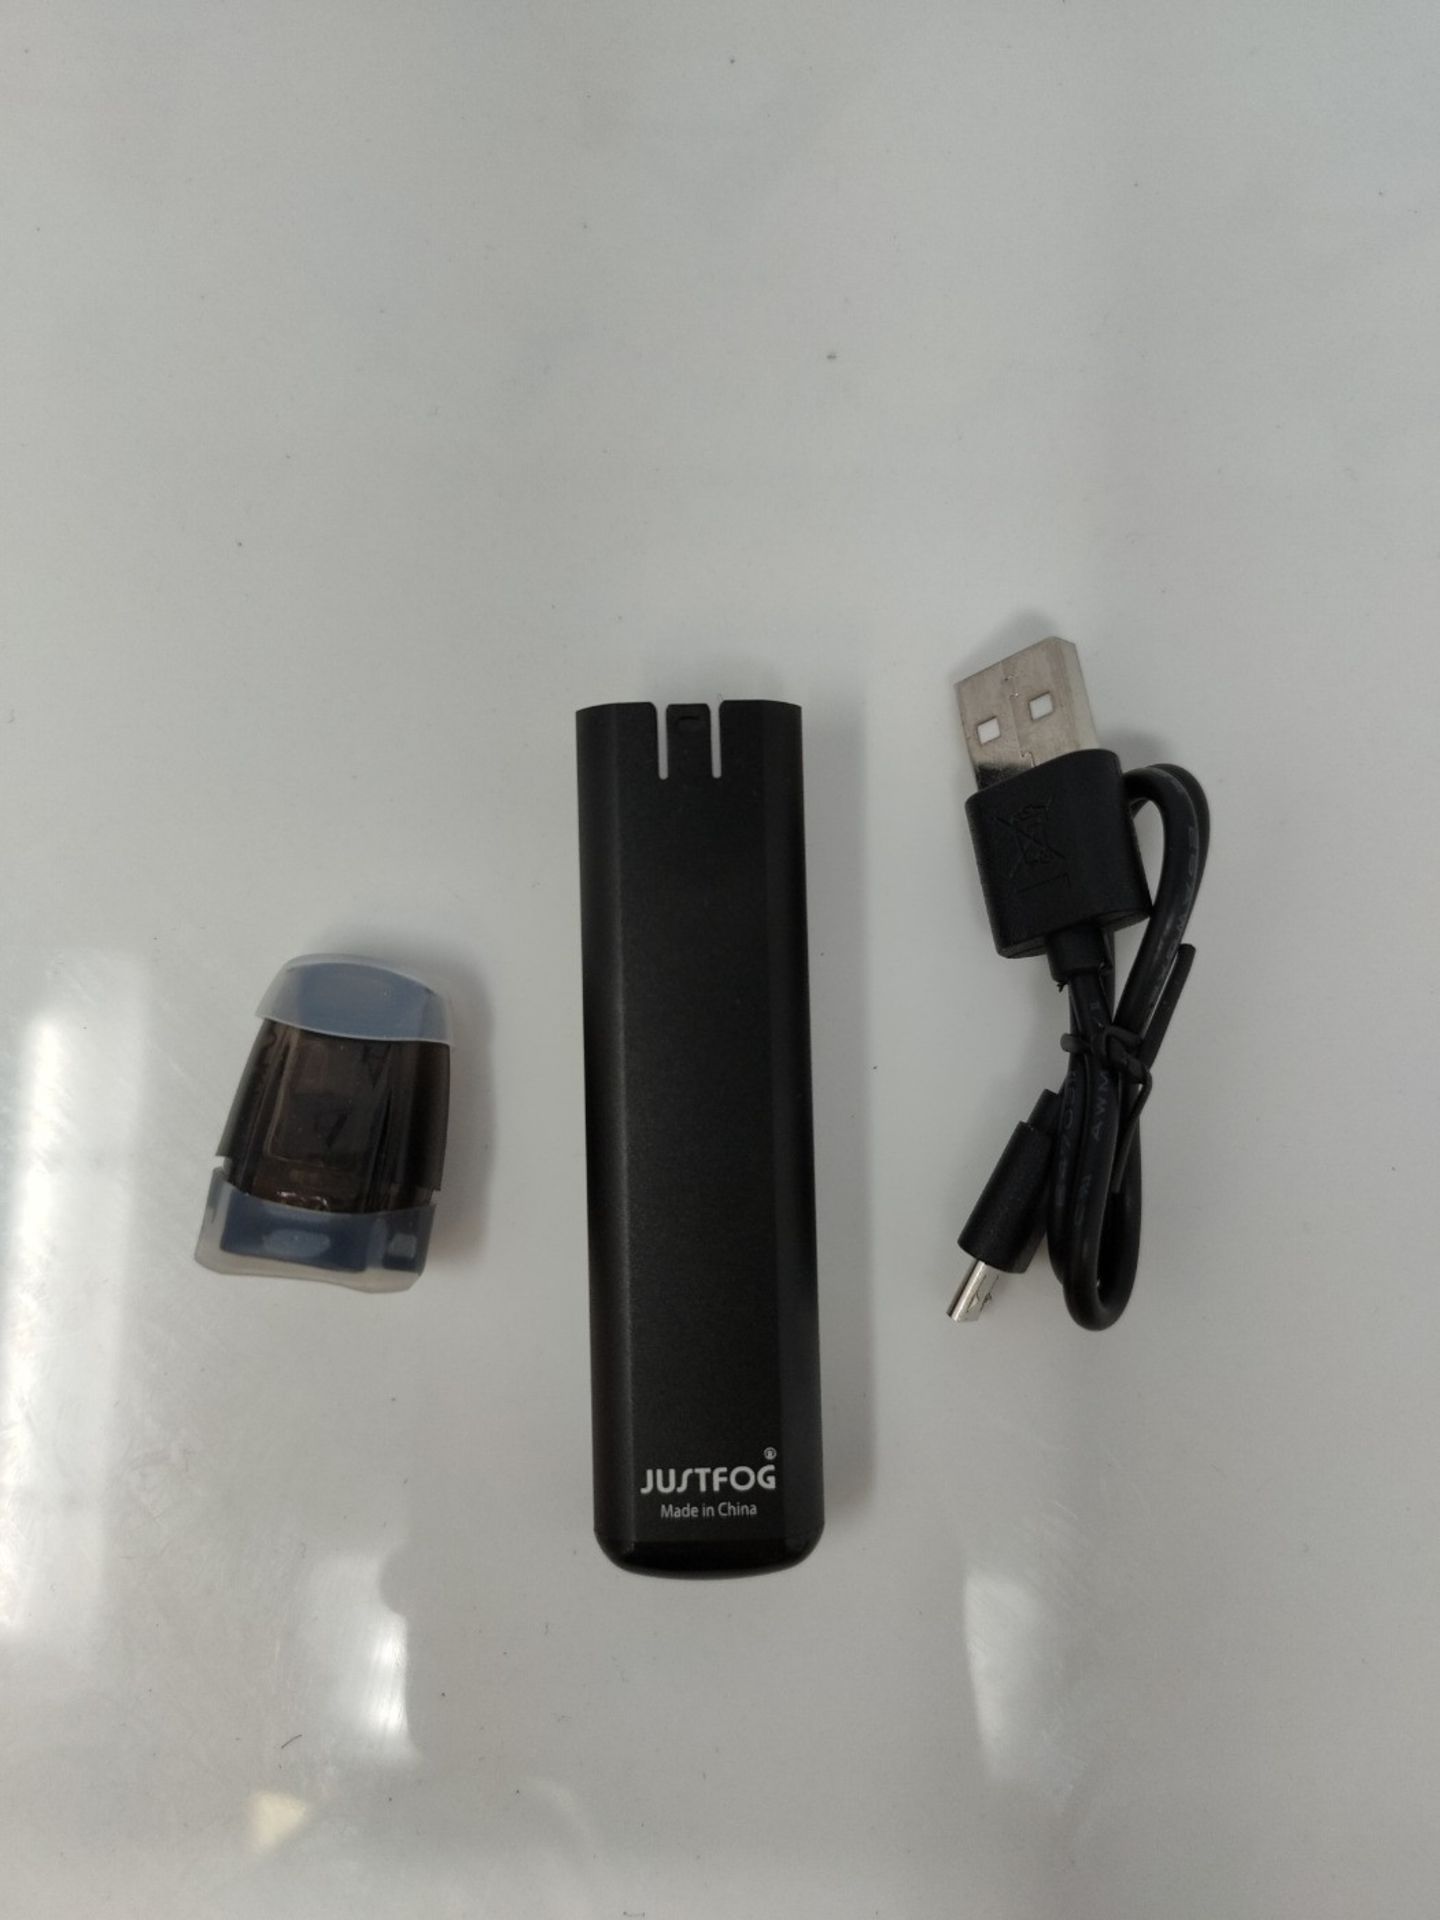 Justfog Minifit Max Kit - Sigaretta elettronica, 650 mAh, Prodotto senza nicotina, Ner - Image 2 of 2